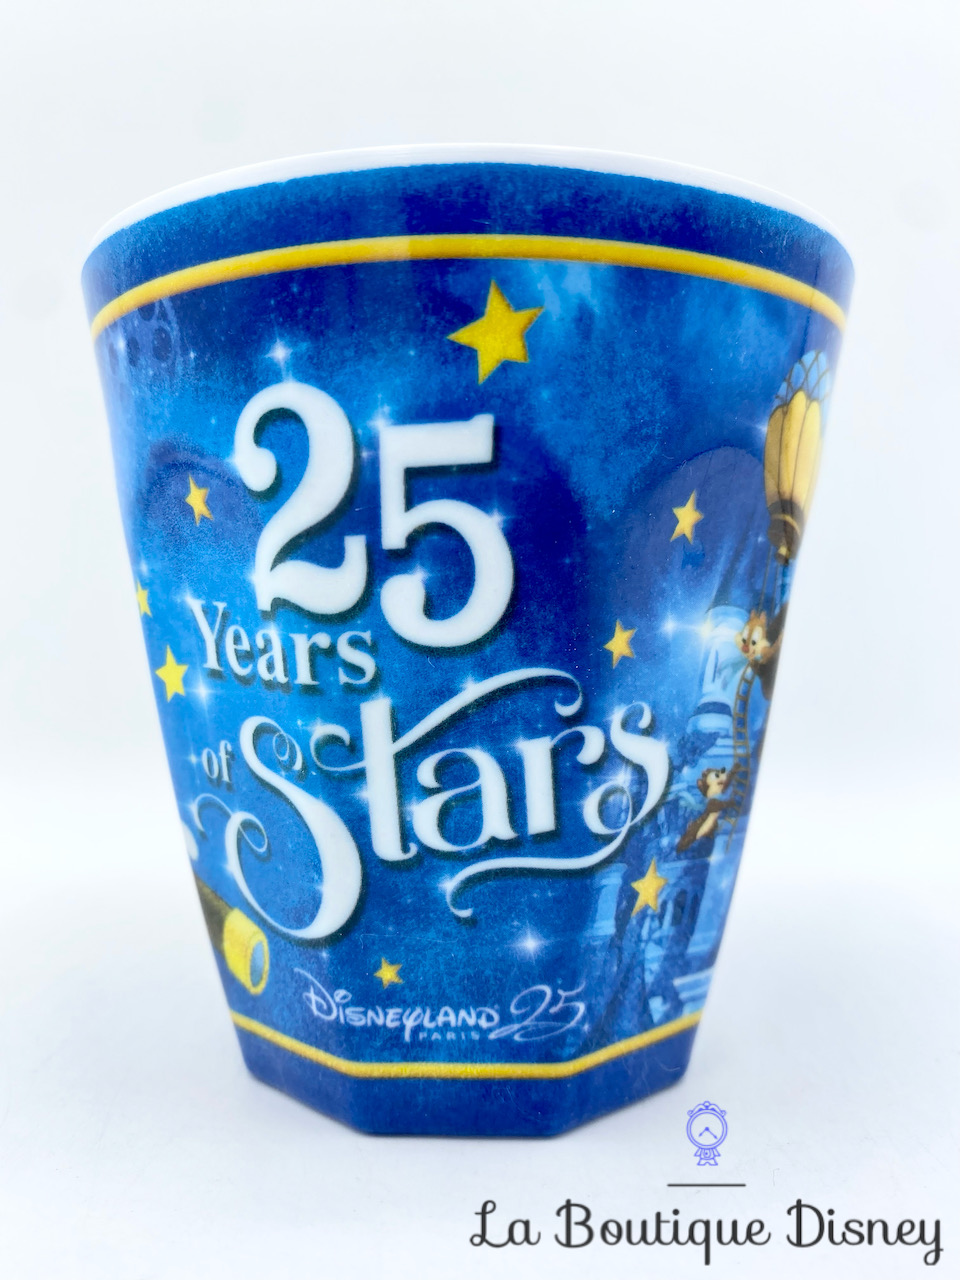 gobelet-mickey-et-ses-amis-25-years-of-stars-disneyland-disney-25-ans-25-ème-anniversaire-verre-bleu-4